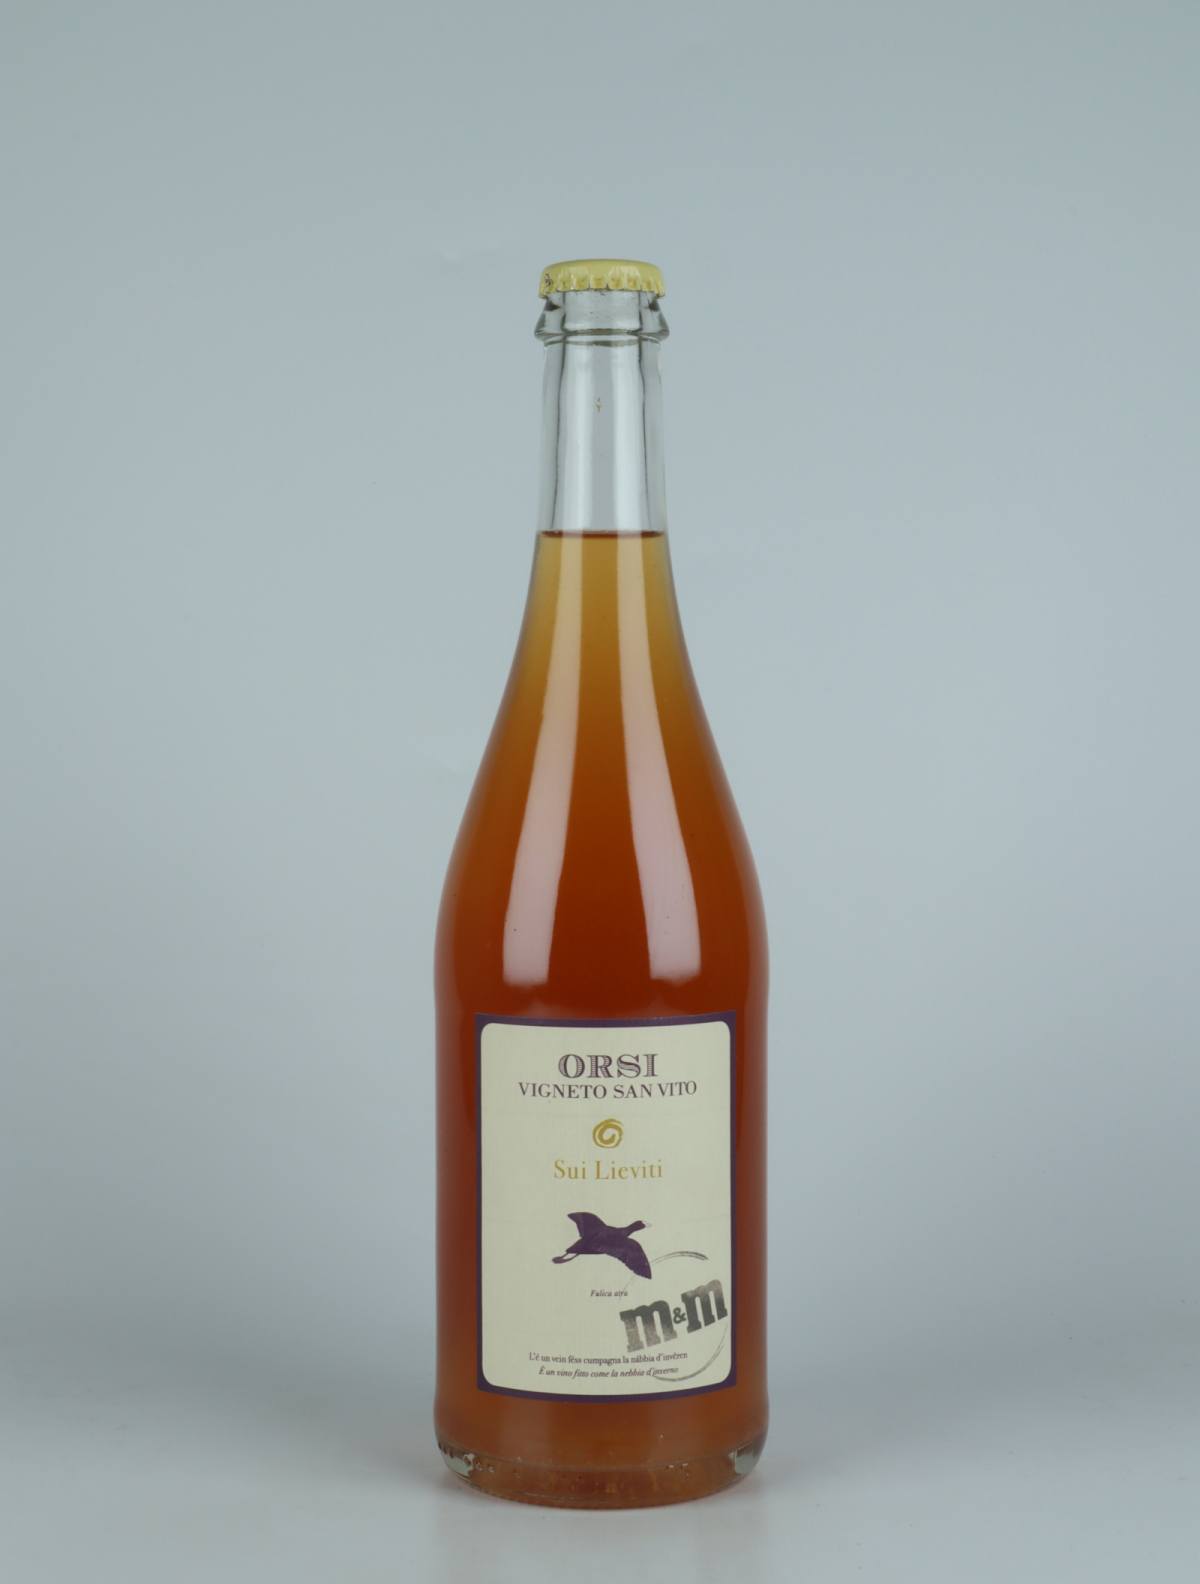 En flaske 2021 Sui Lieviti M&M's Mousserende fra Orsi - San Vito, Emilia-Romagna i Italien